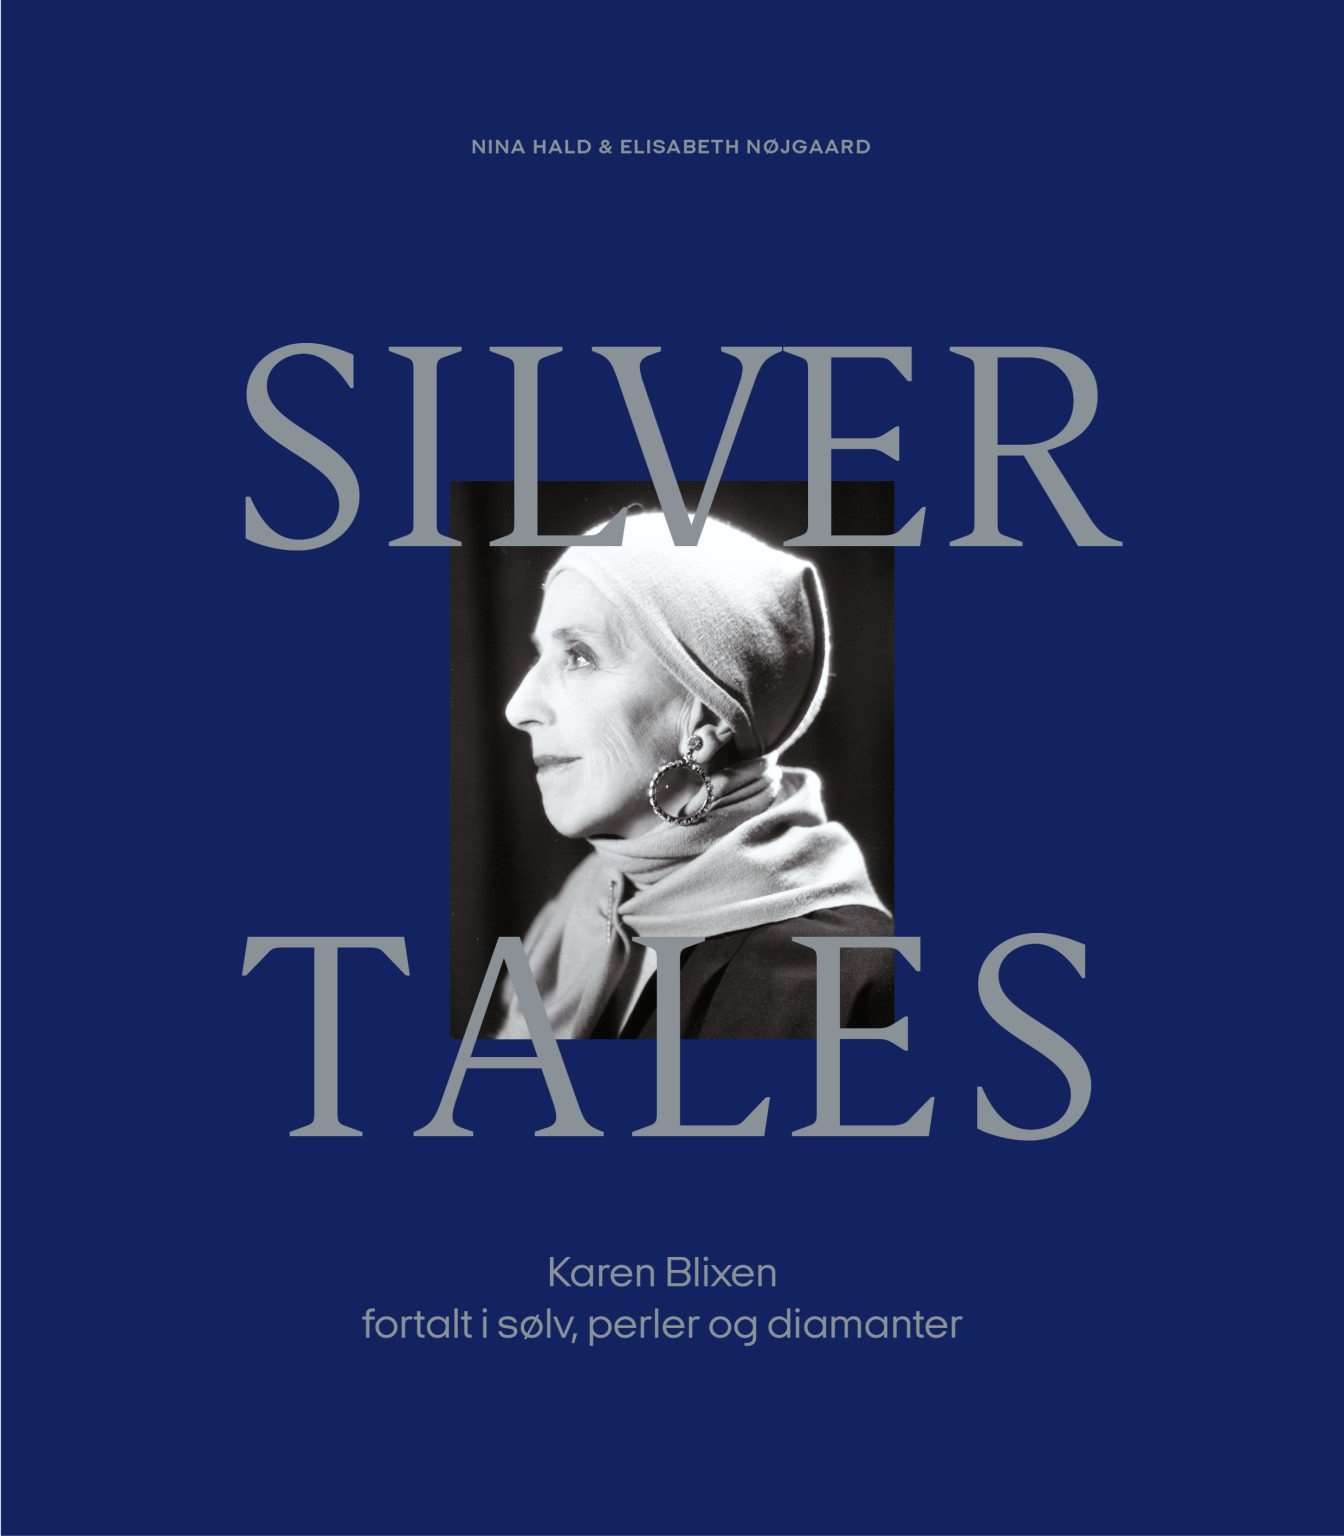 silver tales katalog foto rie nissen, visda